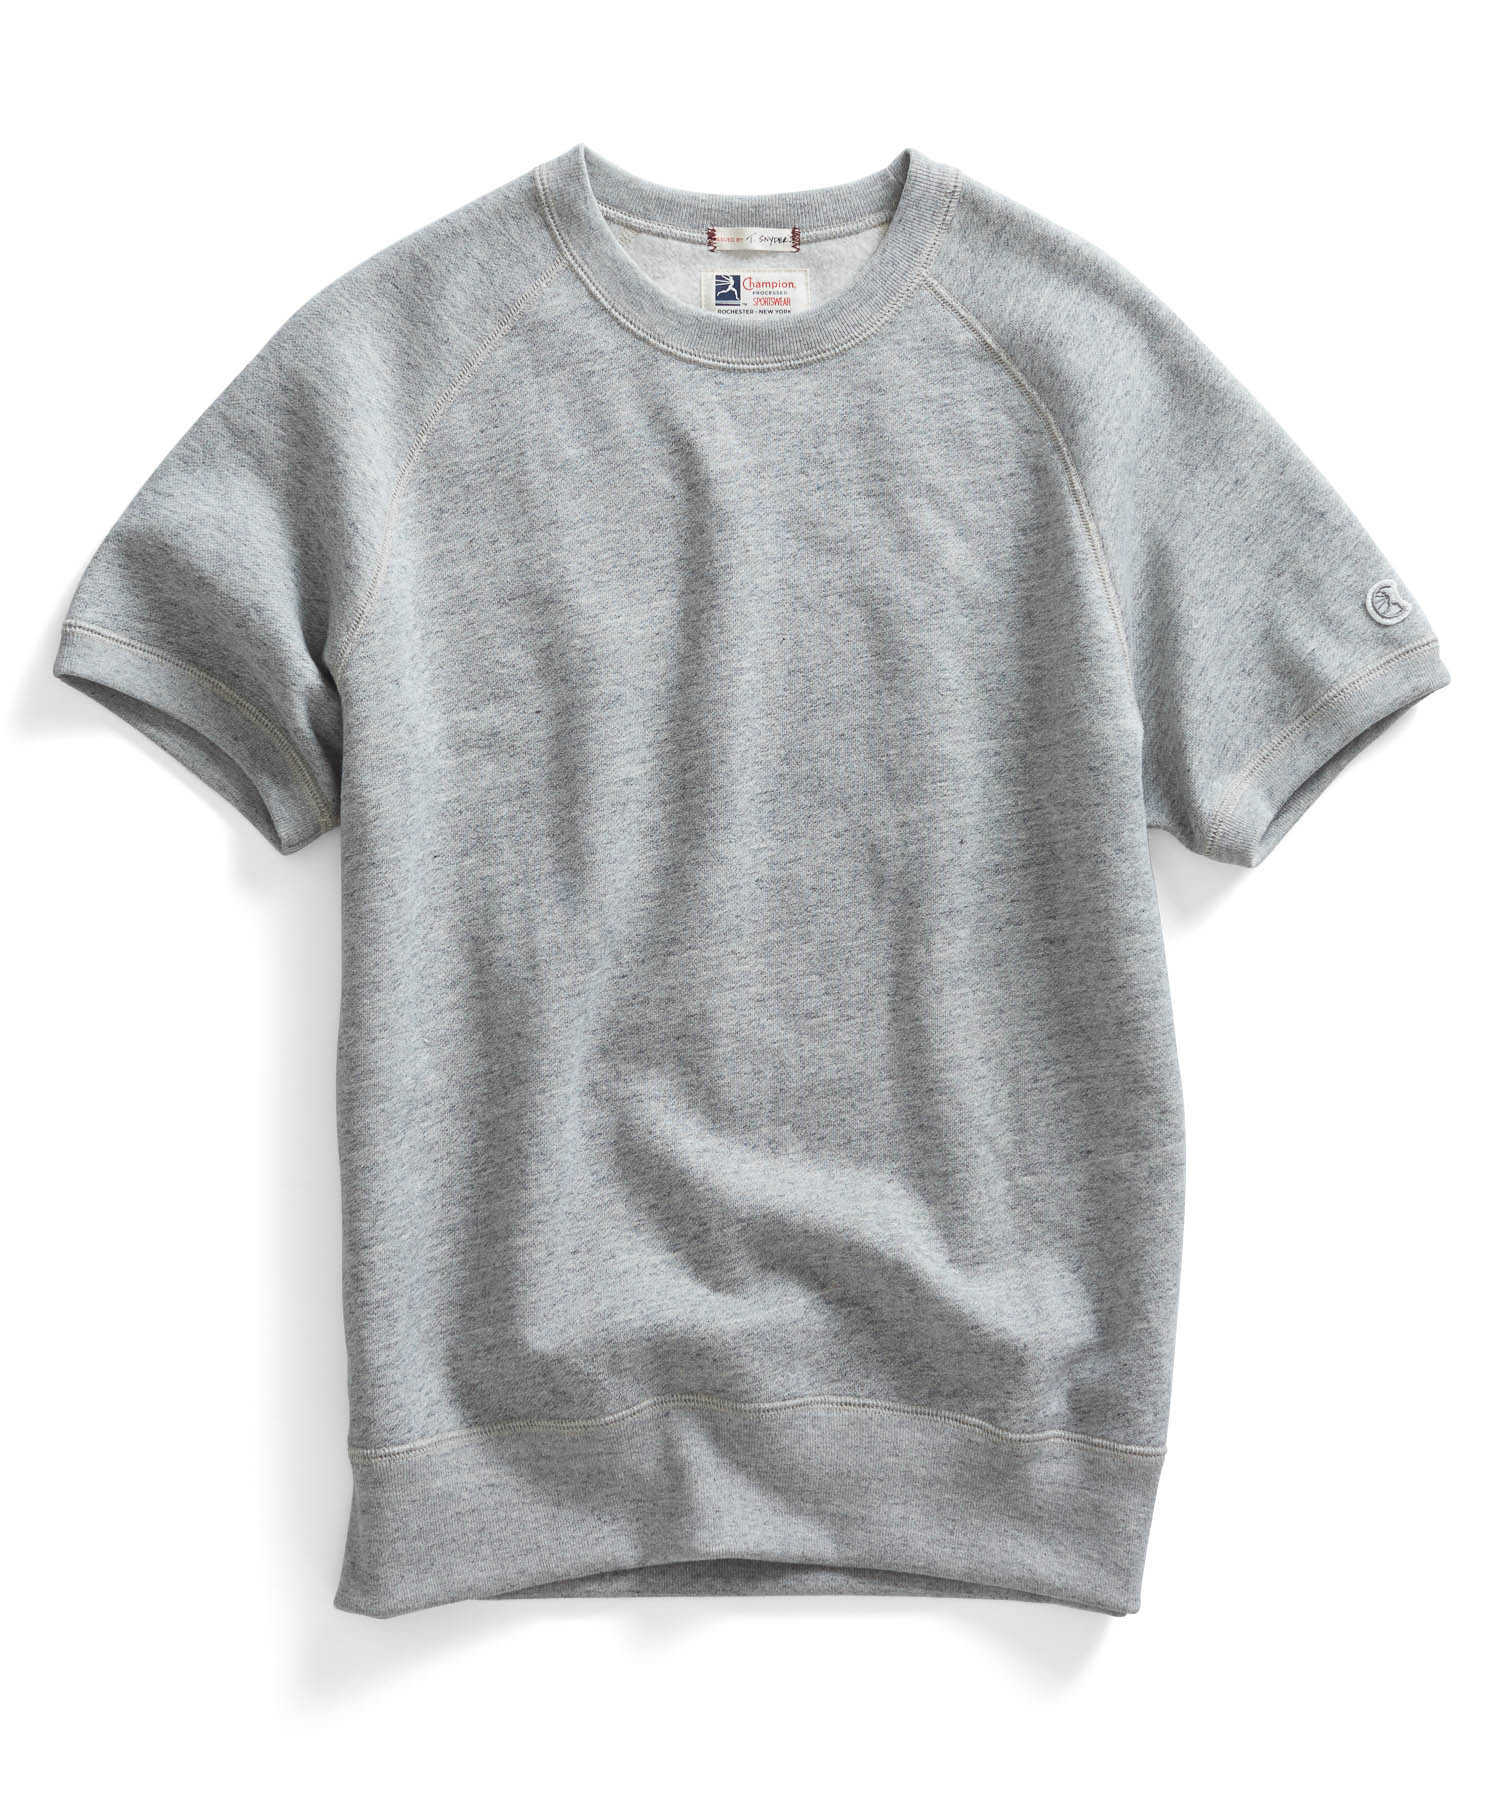 Todd snyder Short Sleeve Sweatshirt In Grey Heather in Gray for Men | Lyst